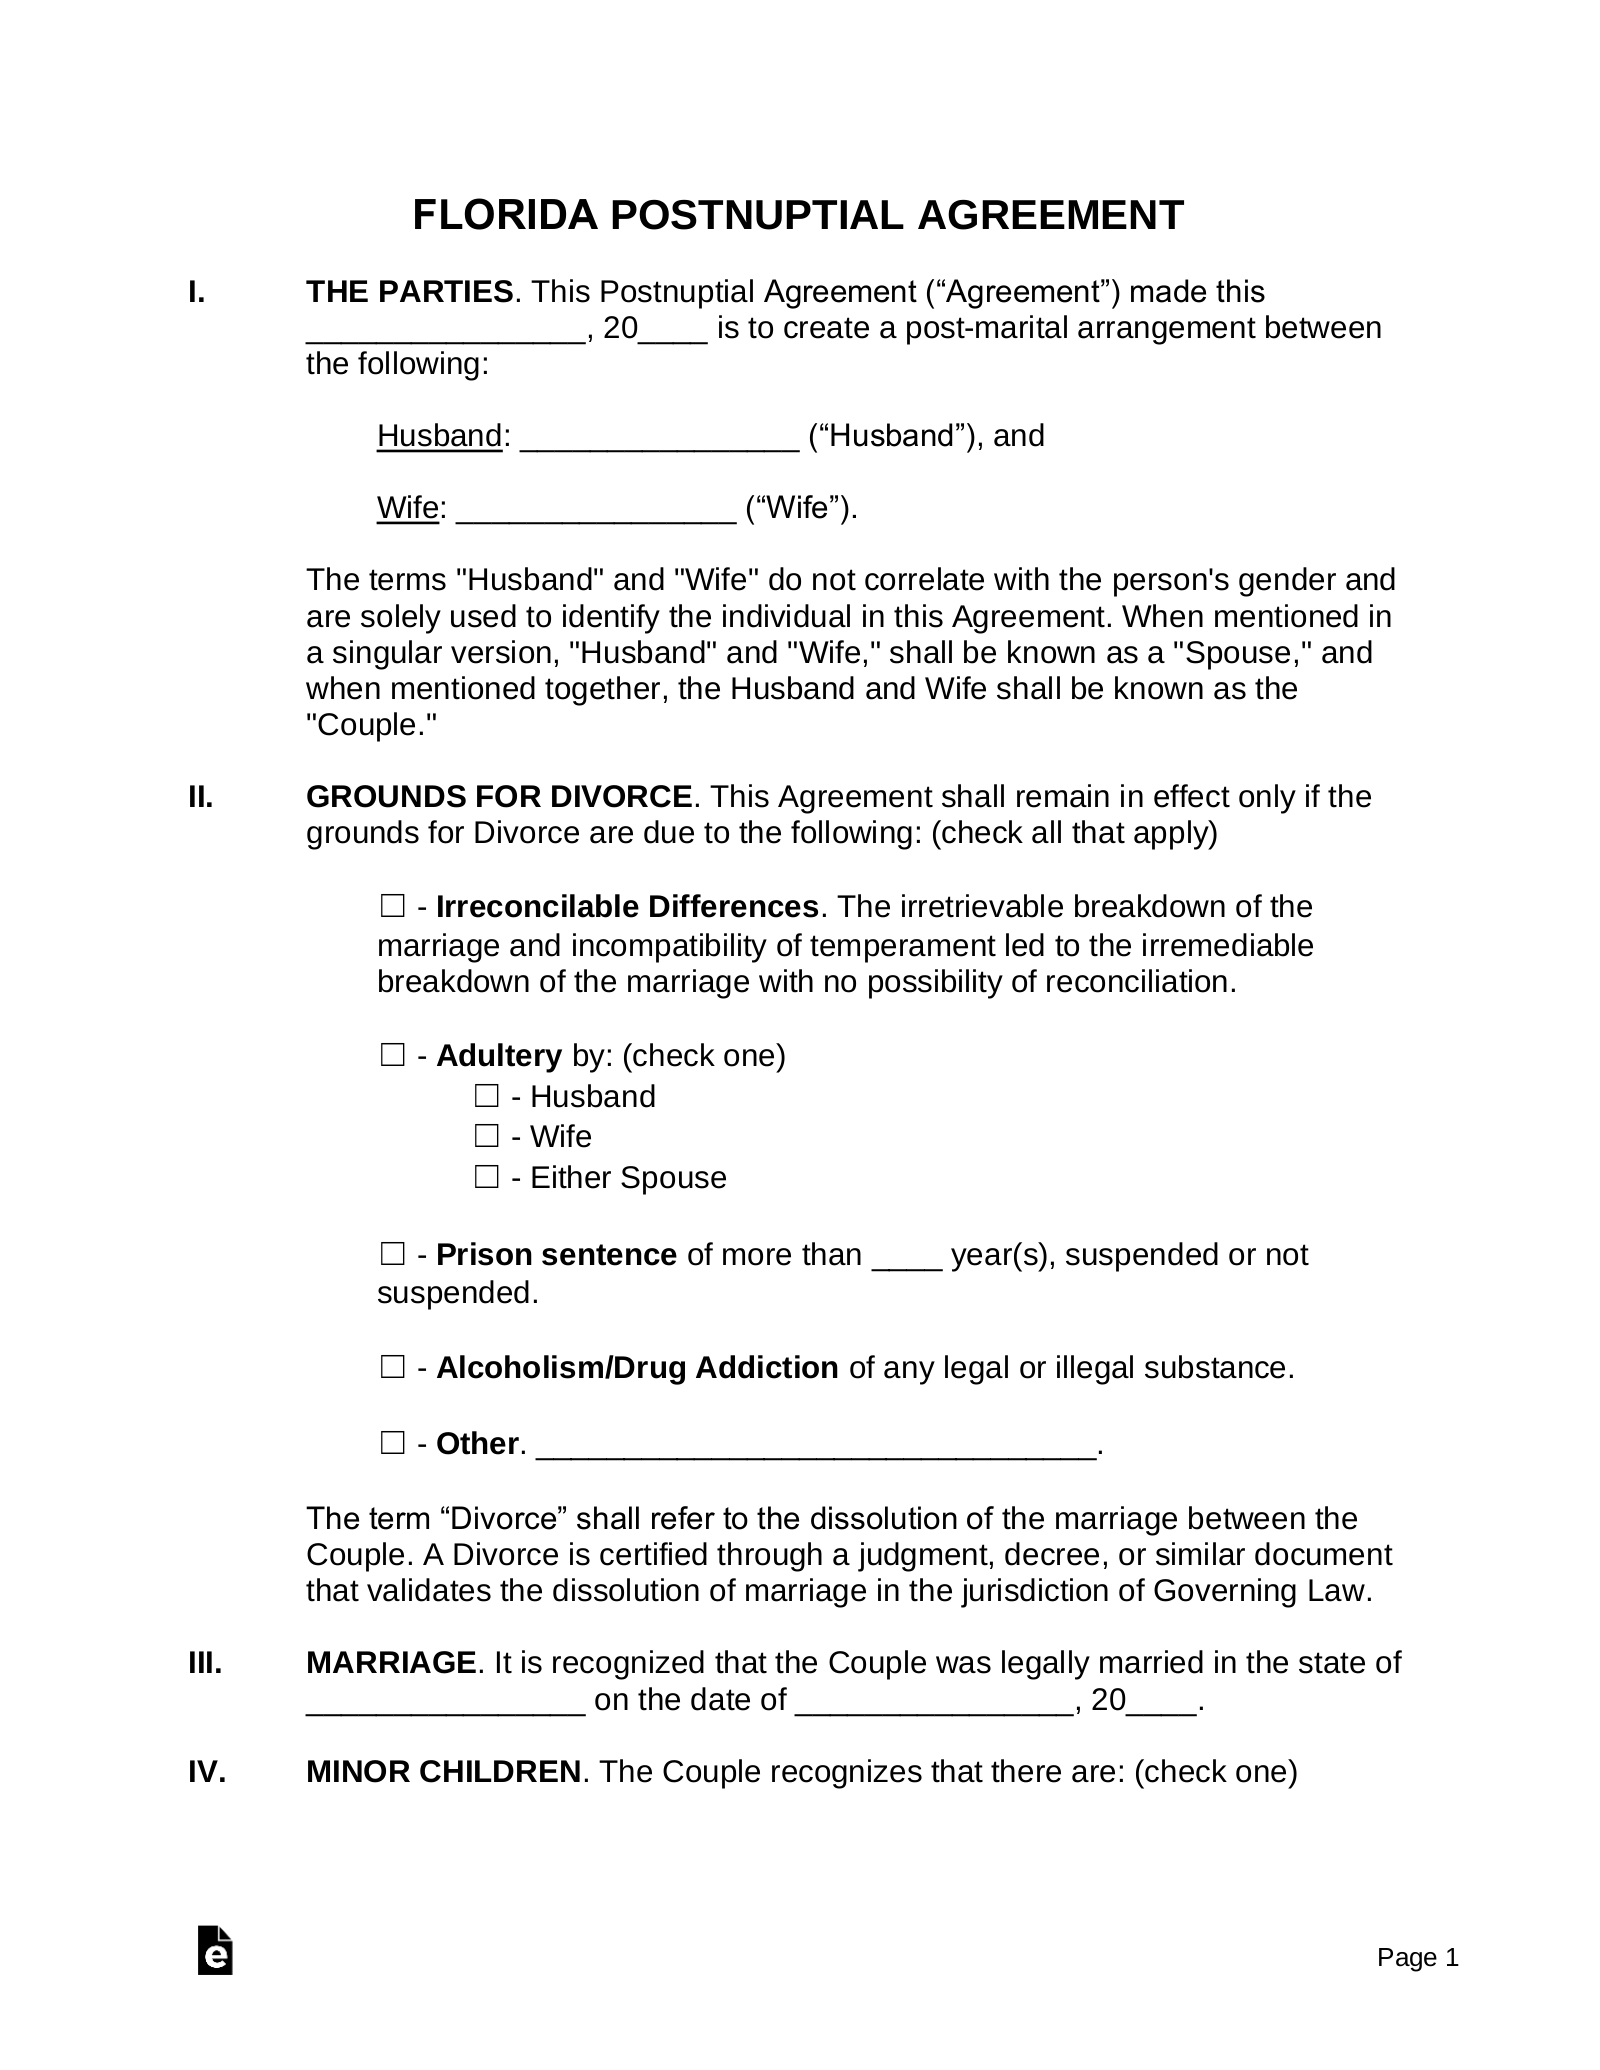 free-florida-postnuptial-agreement-template-pdf-word-eforms